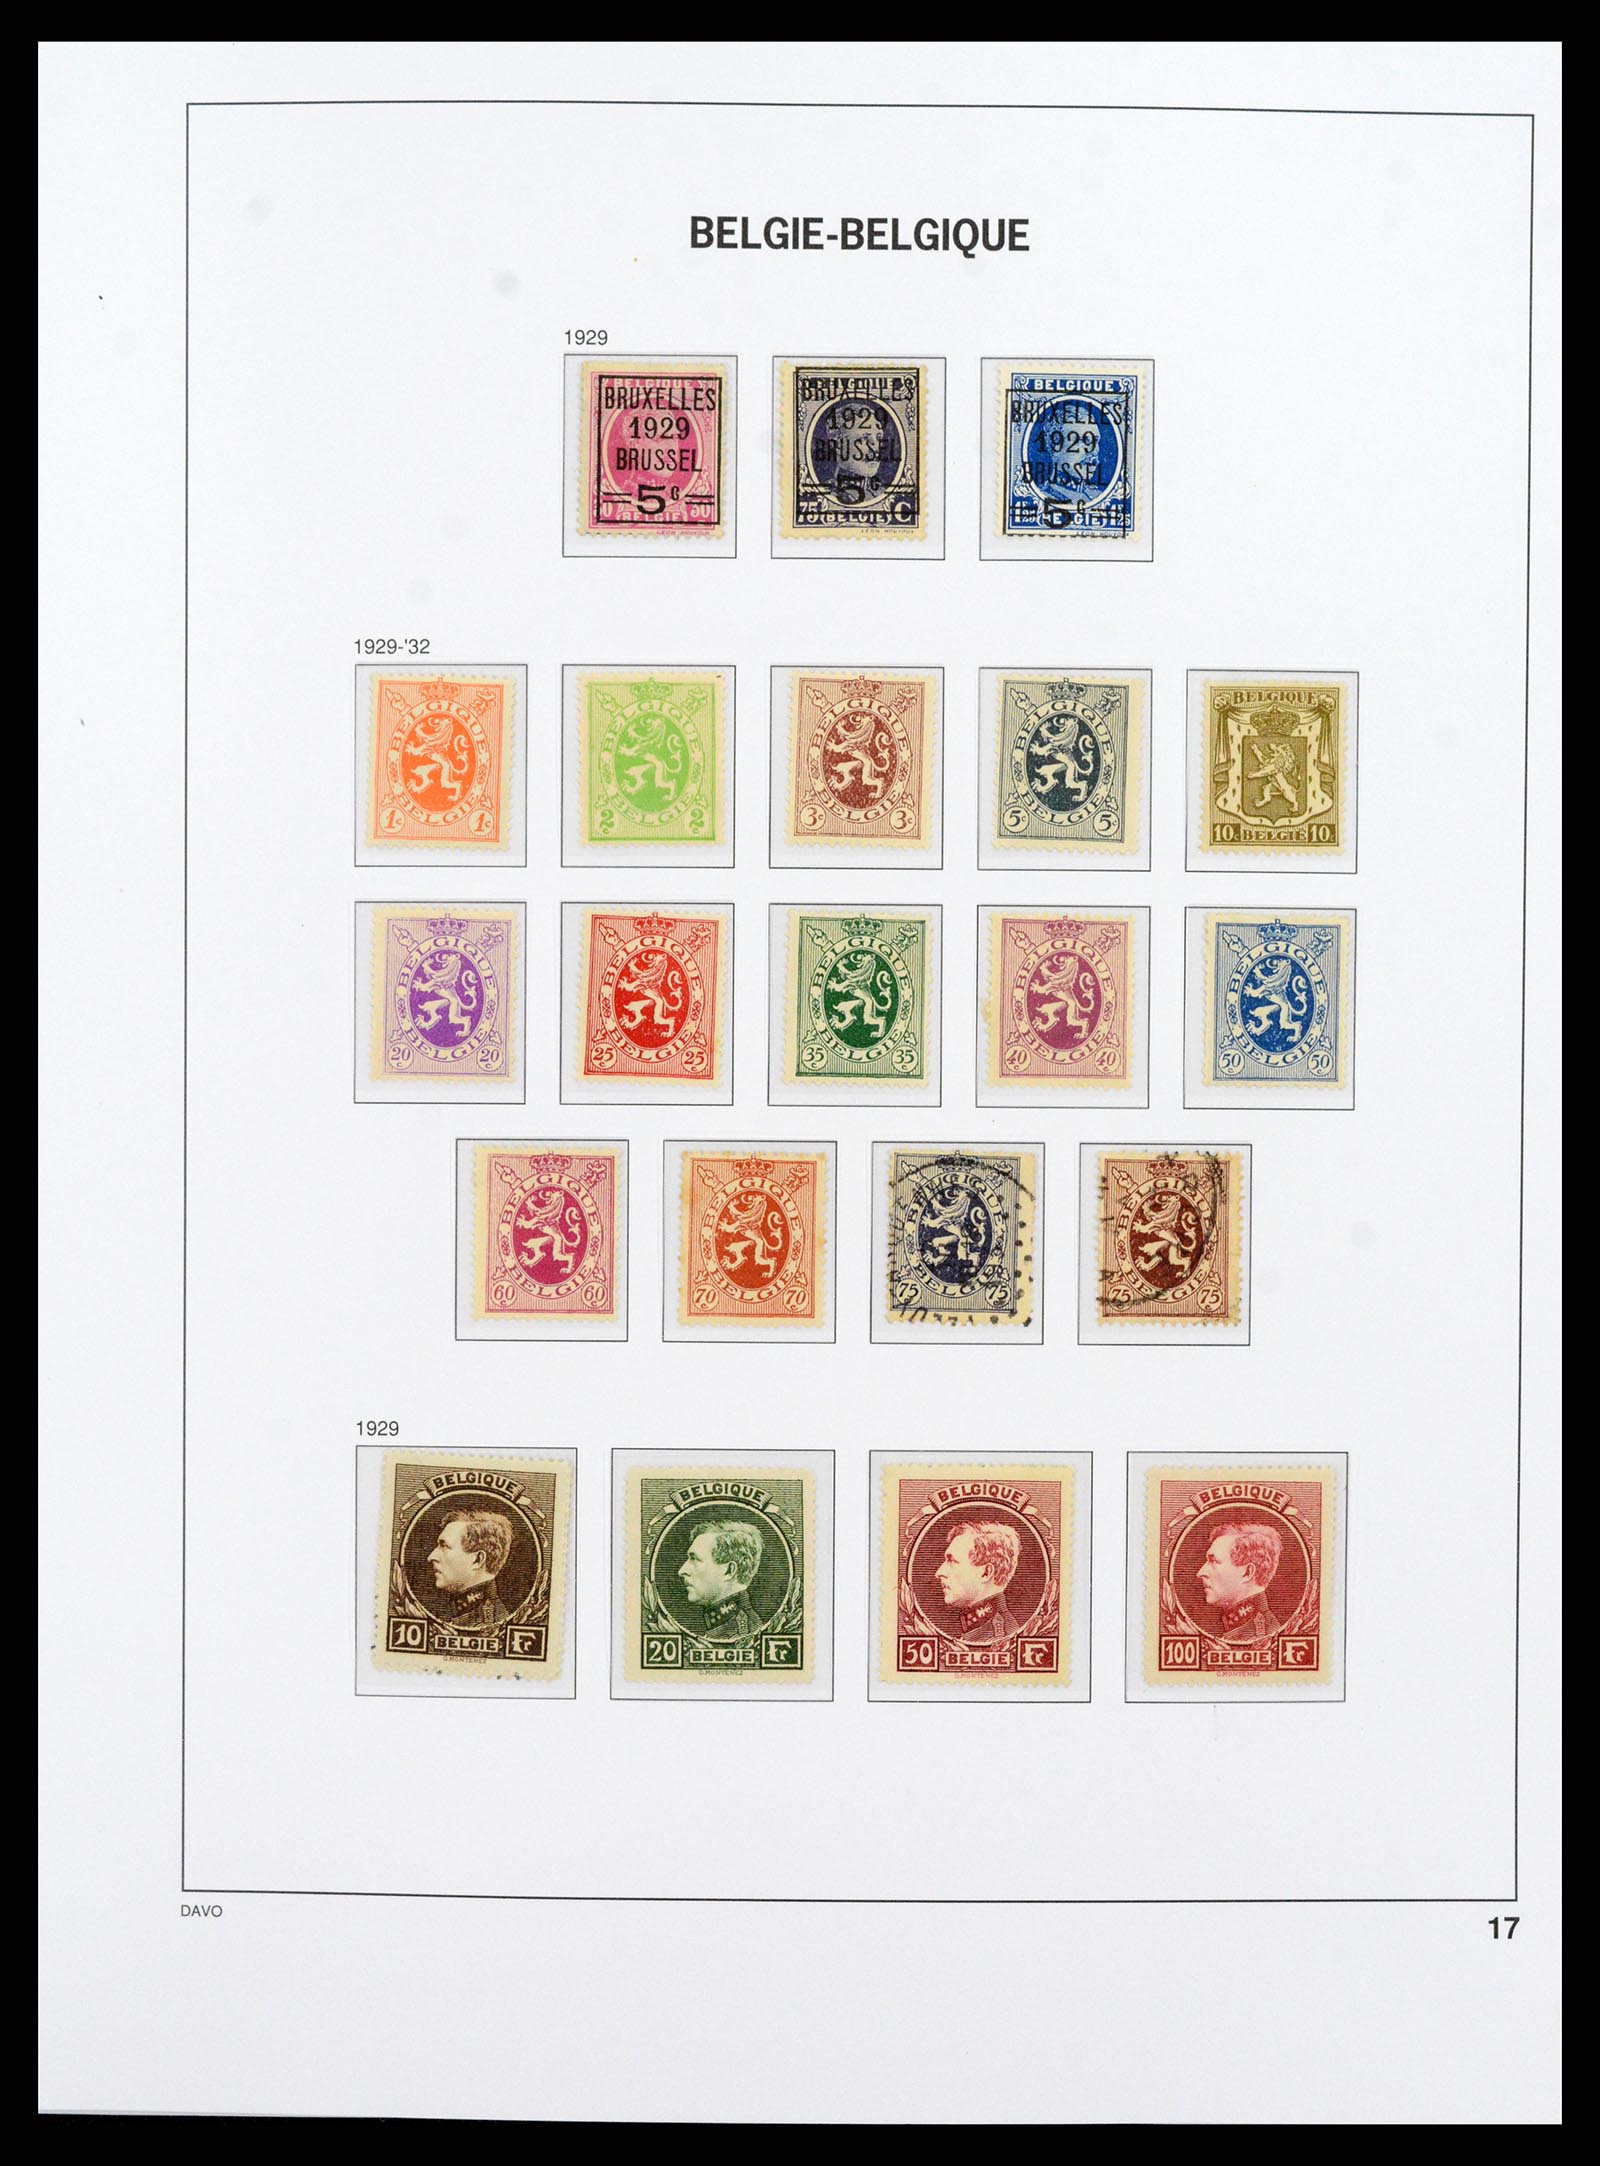 38073 015 - Stamp collection 38073 Belgium 1849-1950.